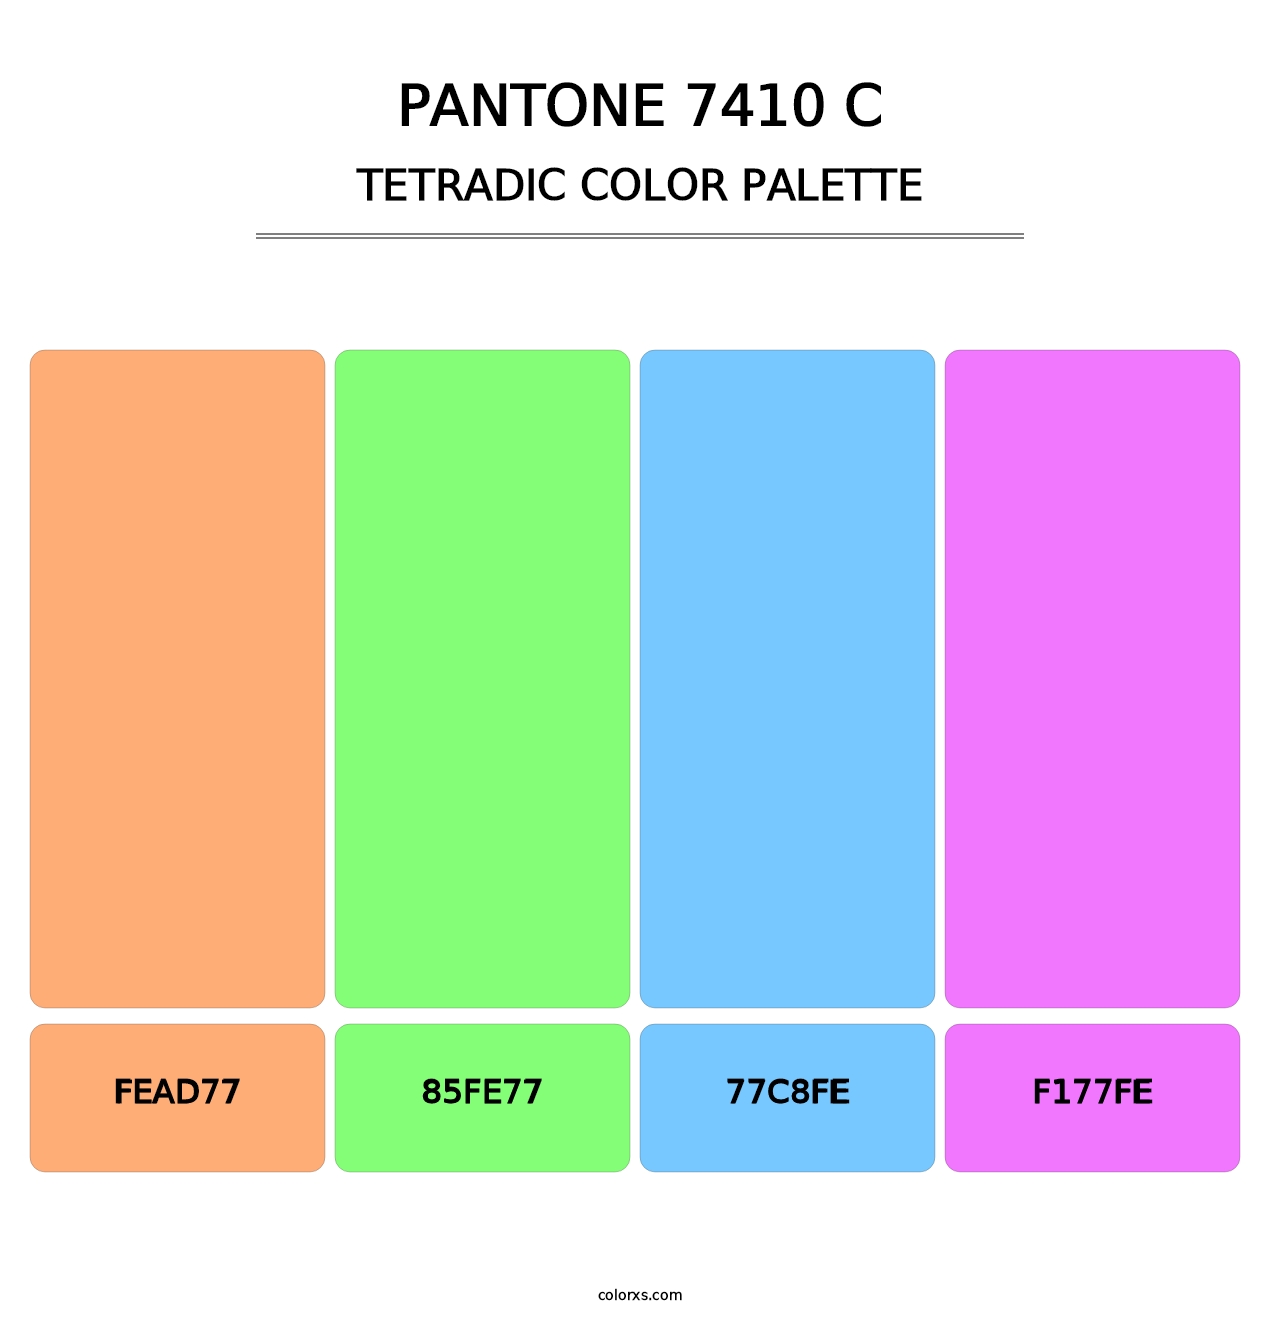 PANTONE 7410 C - Tetradic Color Palette